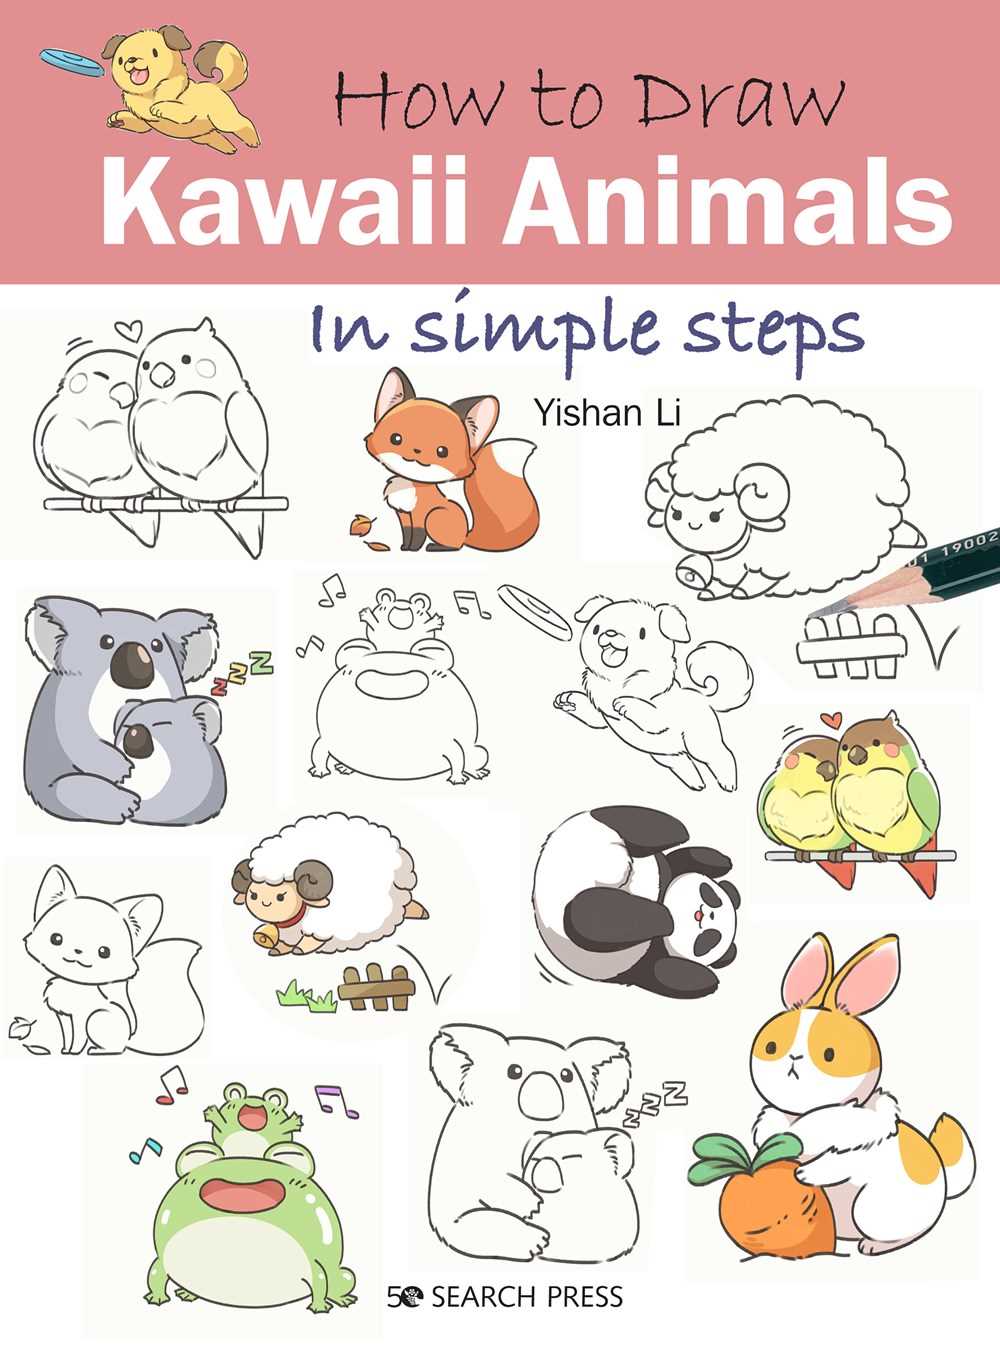 Kawaii Animals (How to Draw)